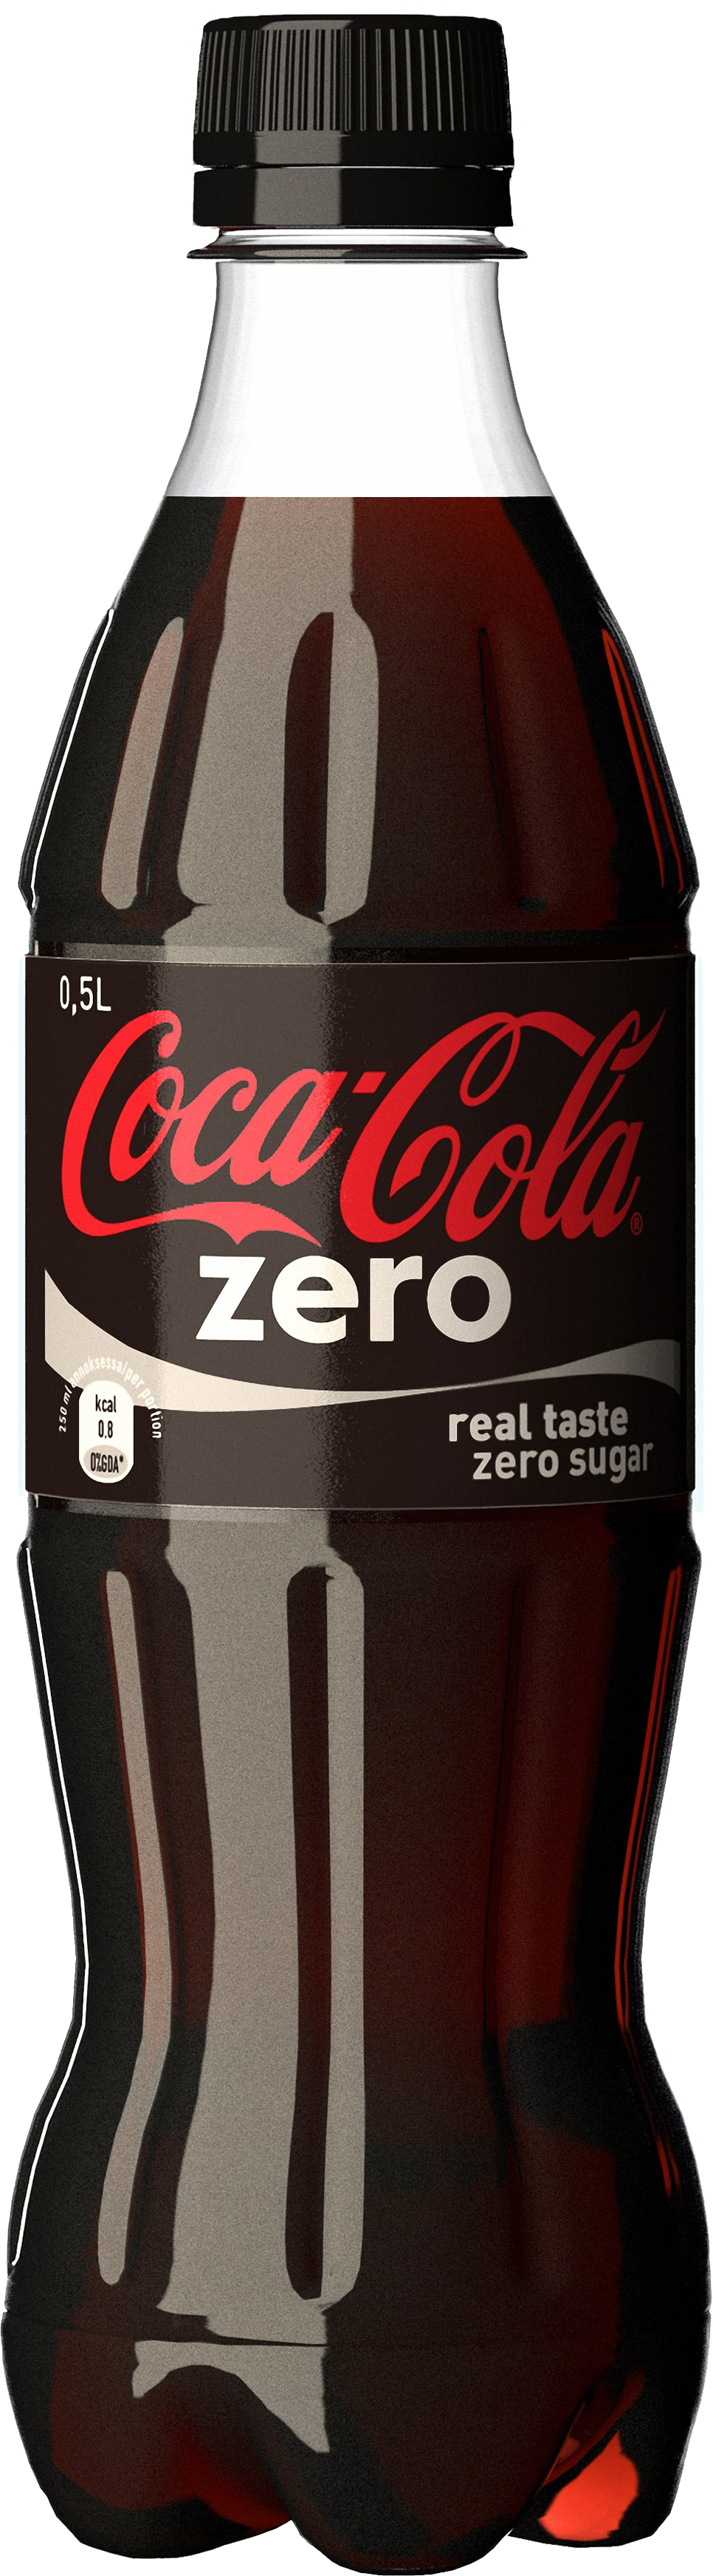 Coca Cola Zero bottle PNG image